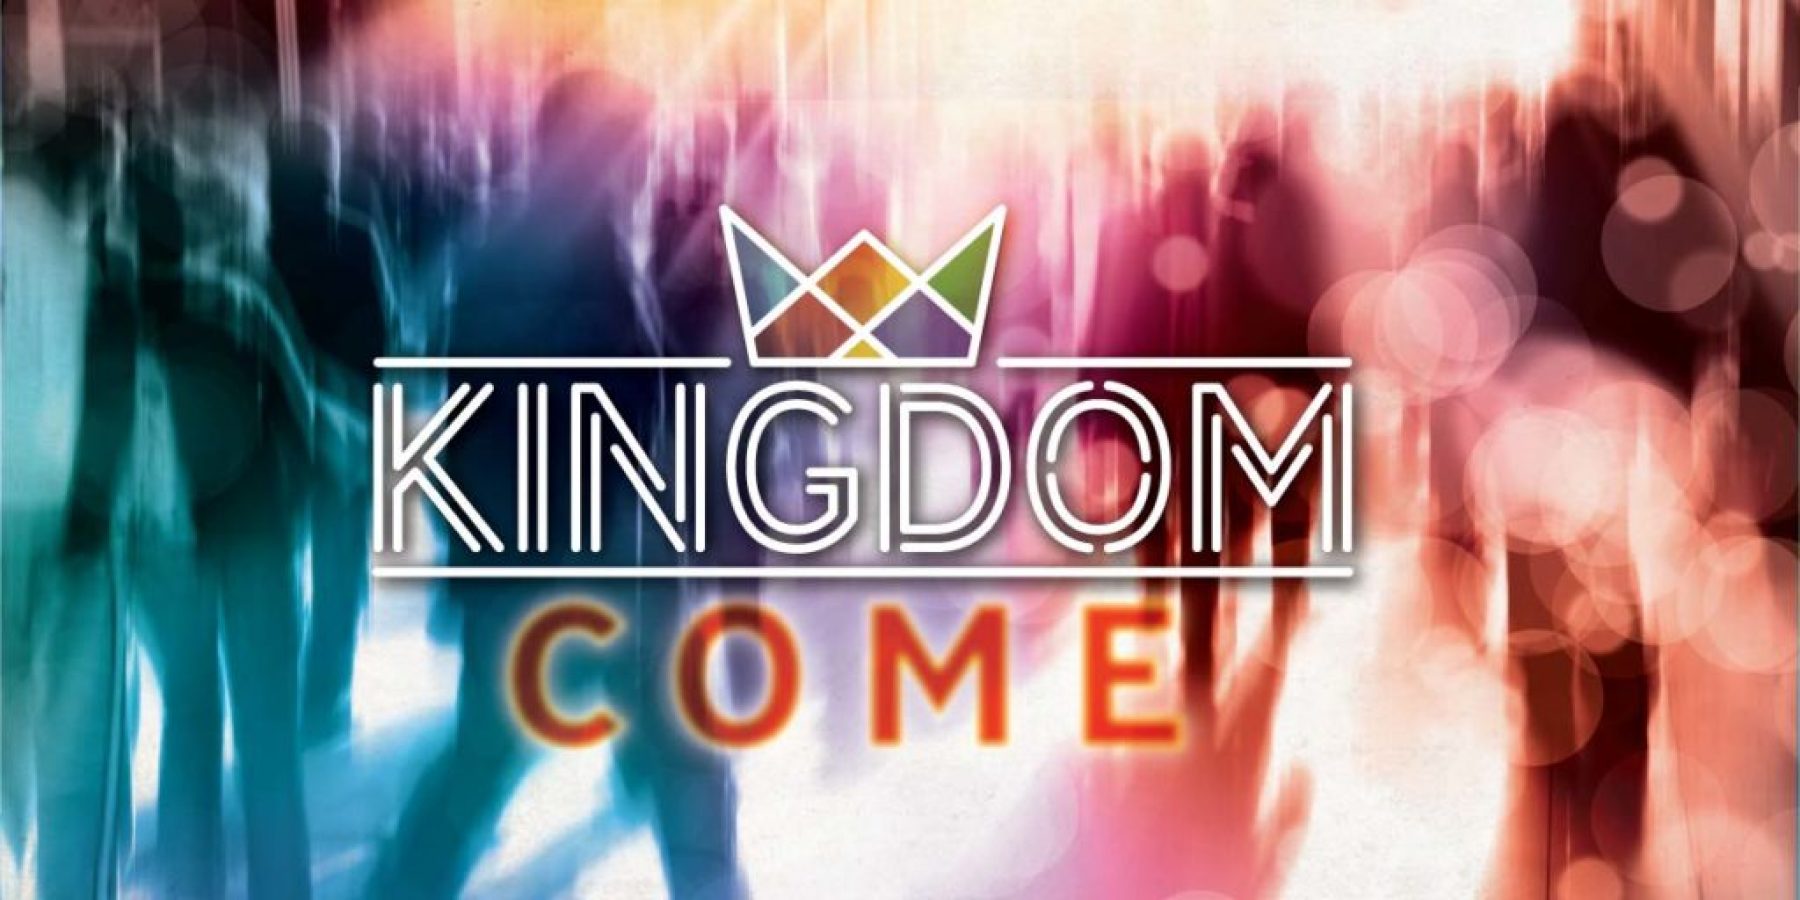 Pursuing Kingdom Come